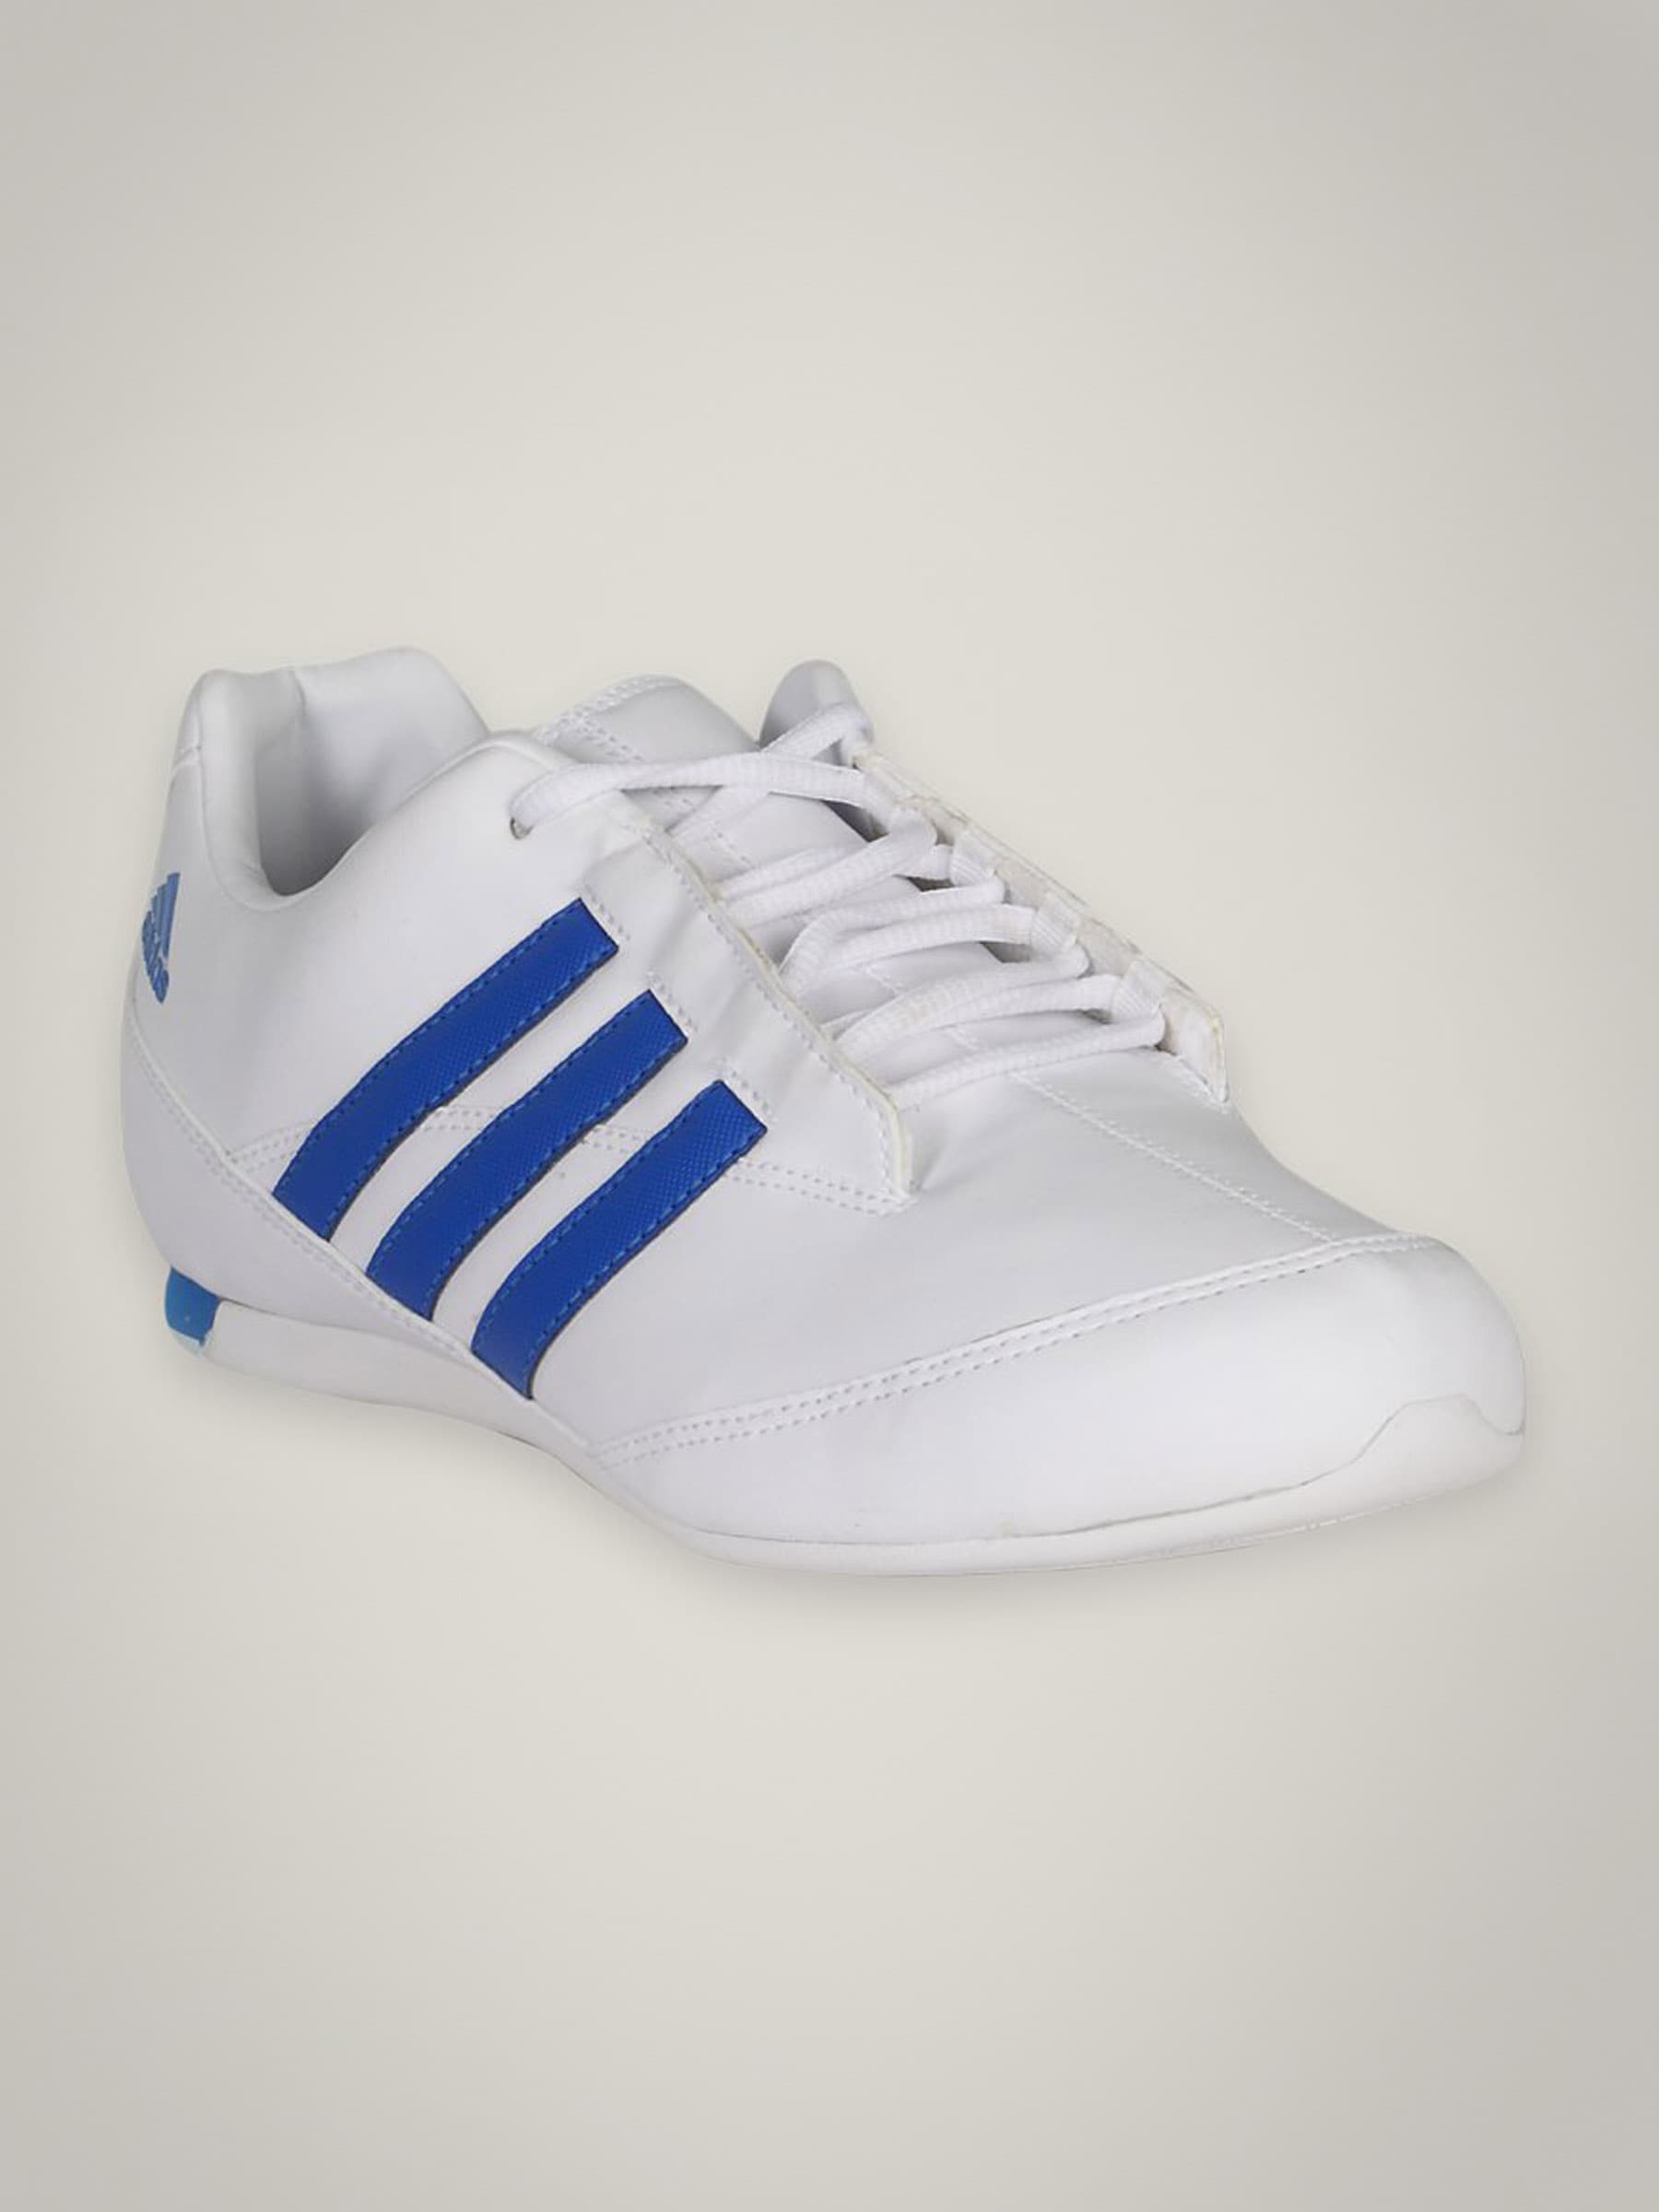 ADIDAS Men's Adi Stylite Low White Blue Shoe